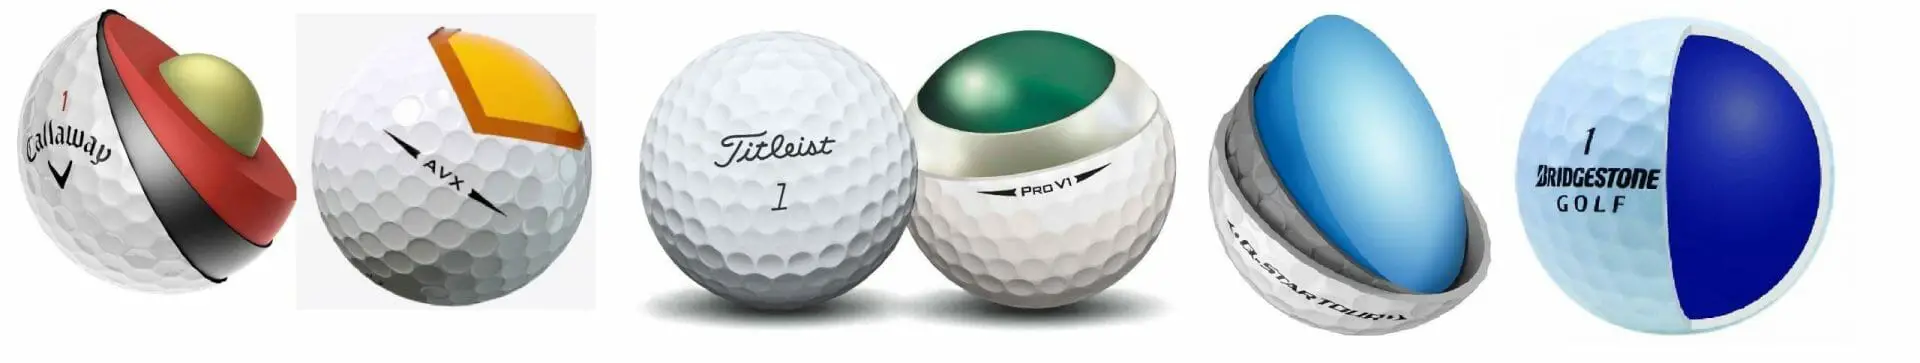 junior golf balls